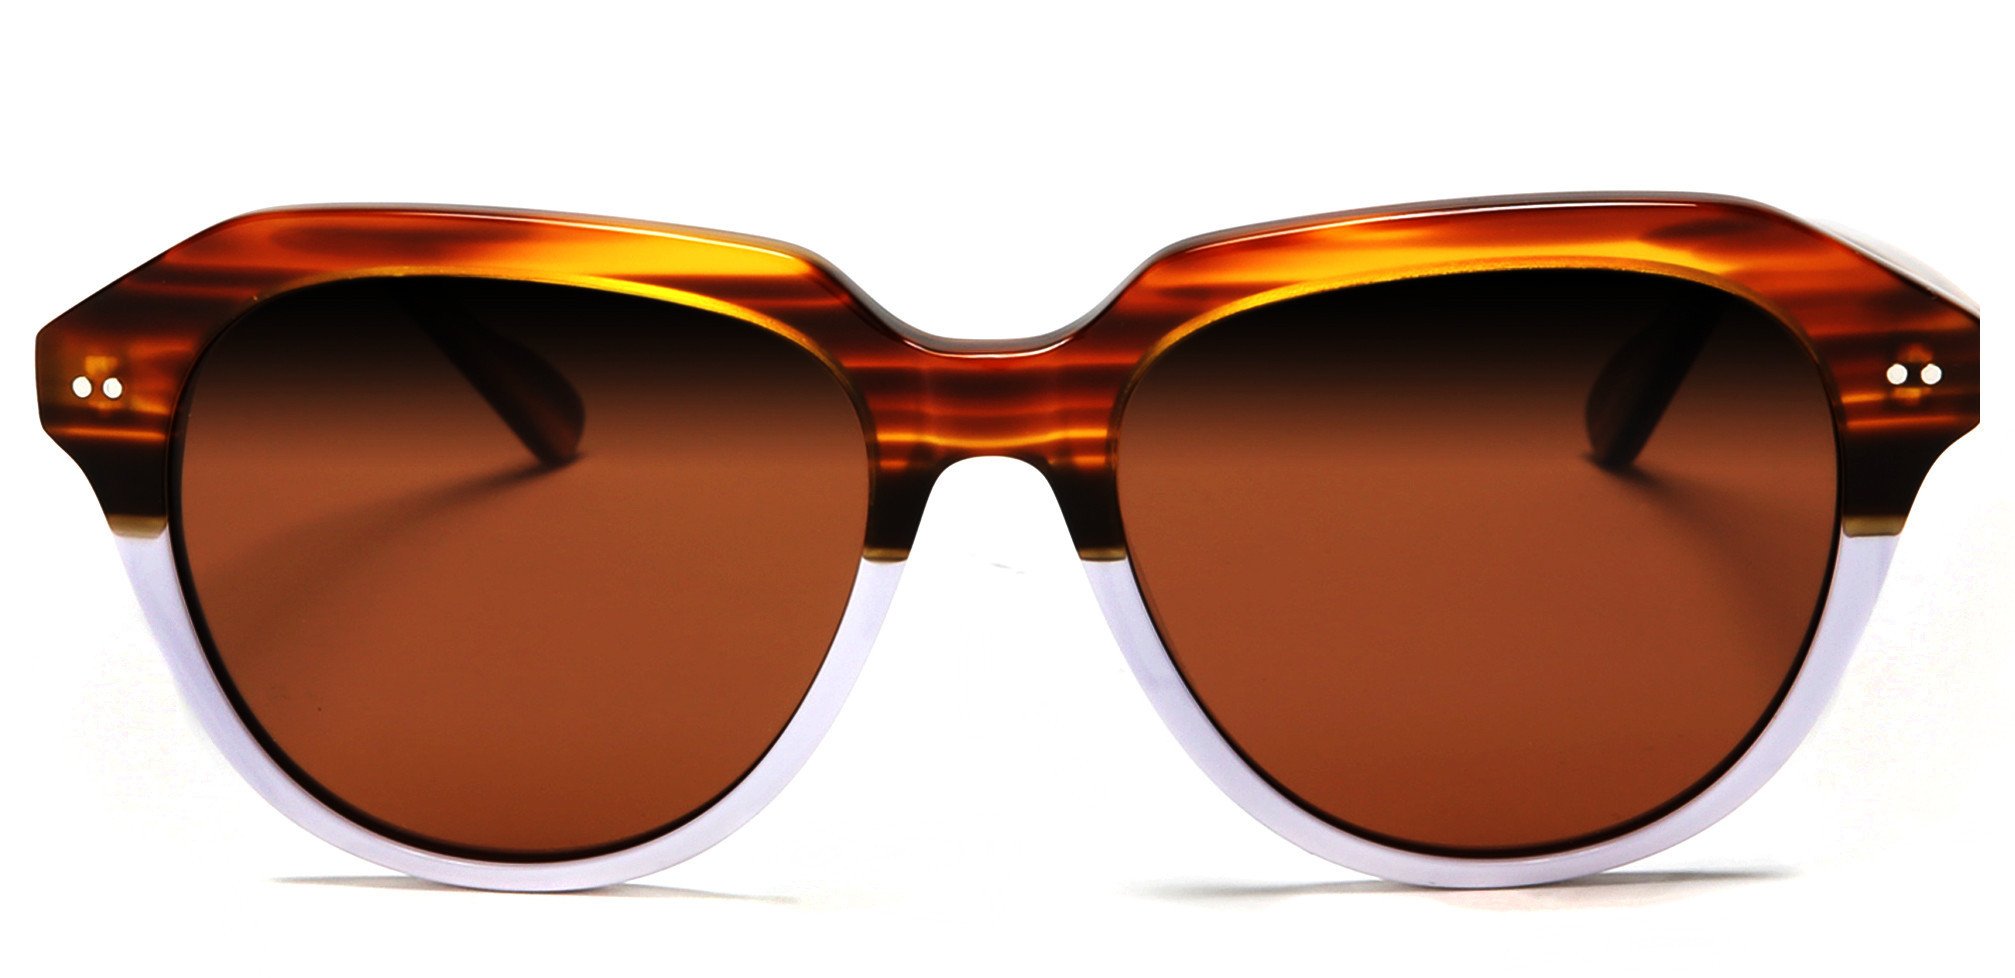 Men's Sunglasses Oversized Dark Lens Fashion Designer 2023 New Models  Shades Big | eBay